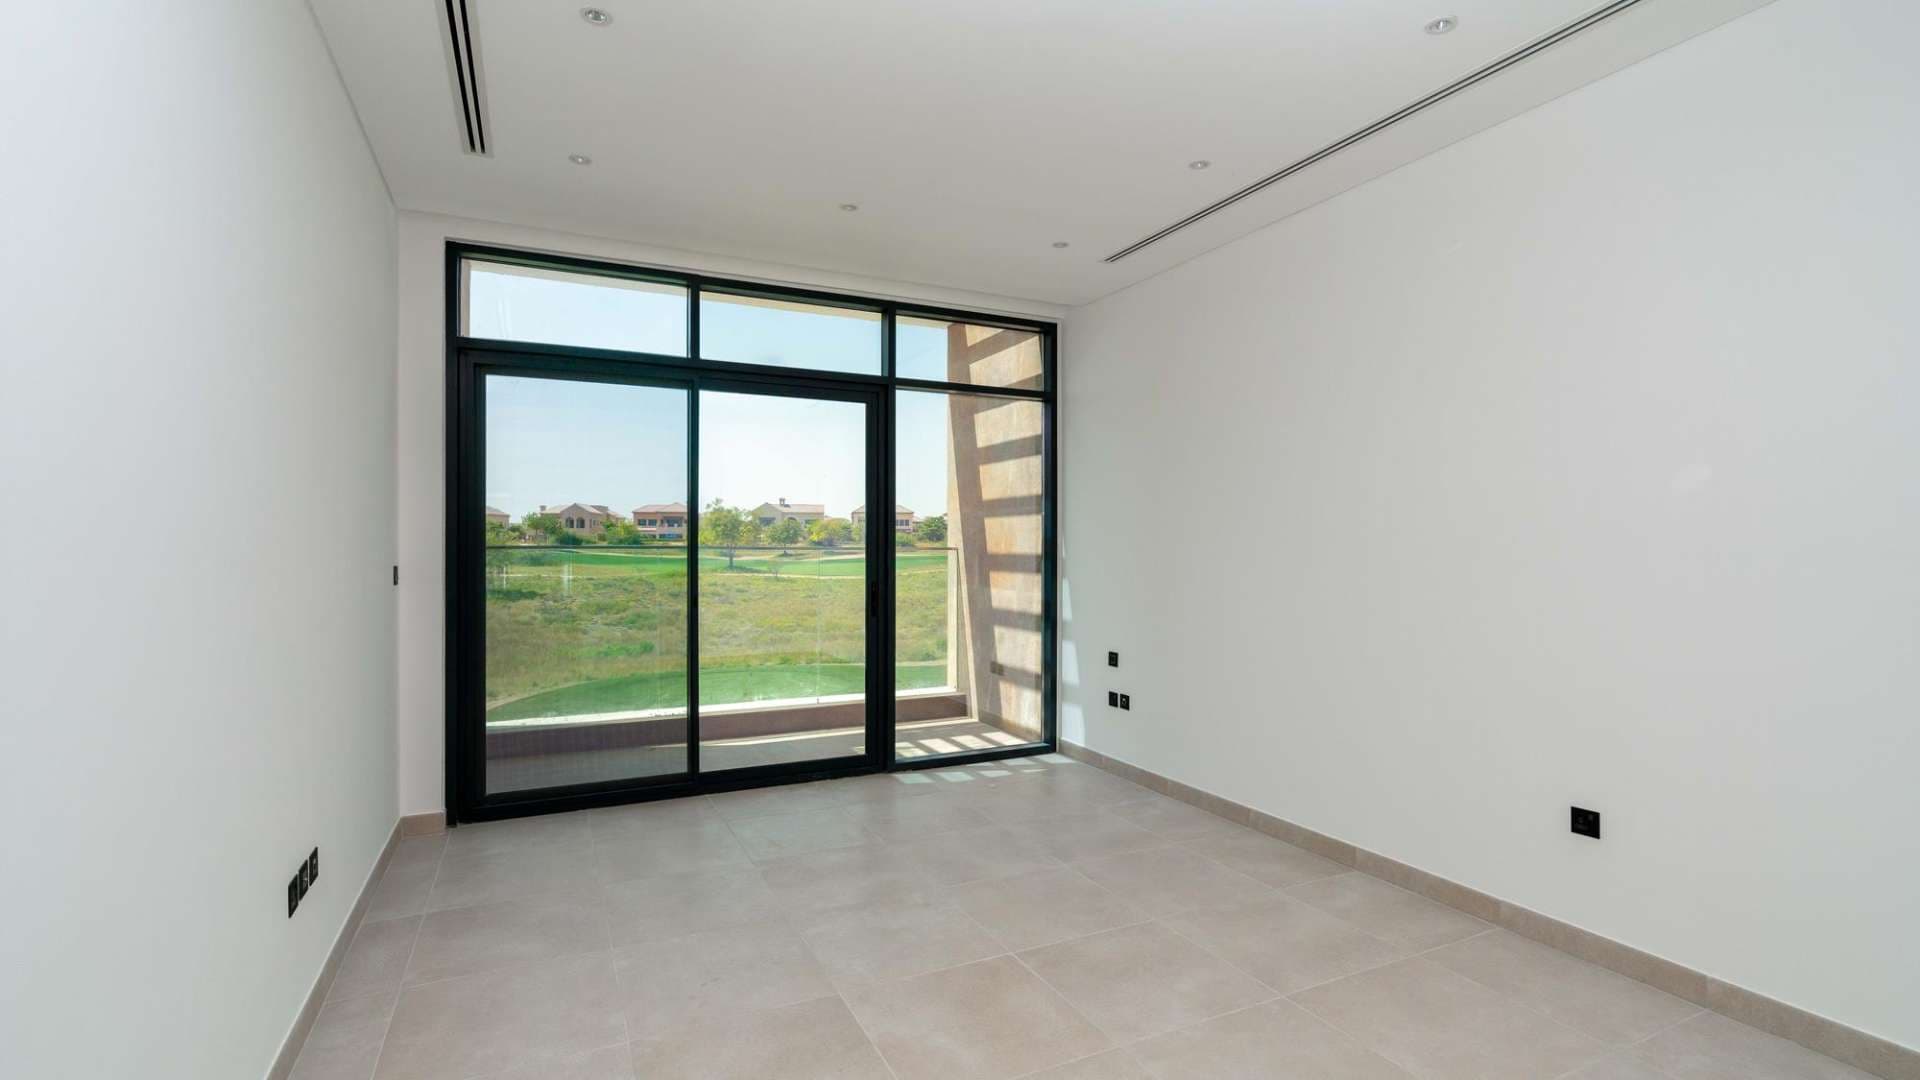 4 Bedroom Villa For Sale Jumeirah Luxury Living Lp0022 D995de4b29d5080.jpg